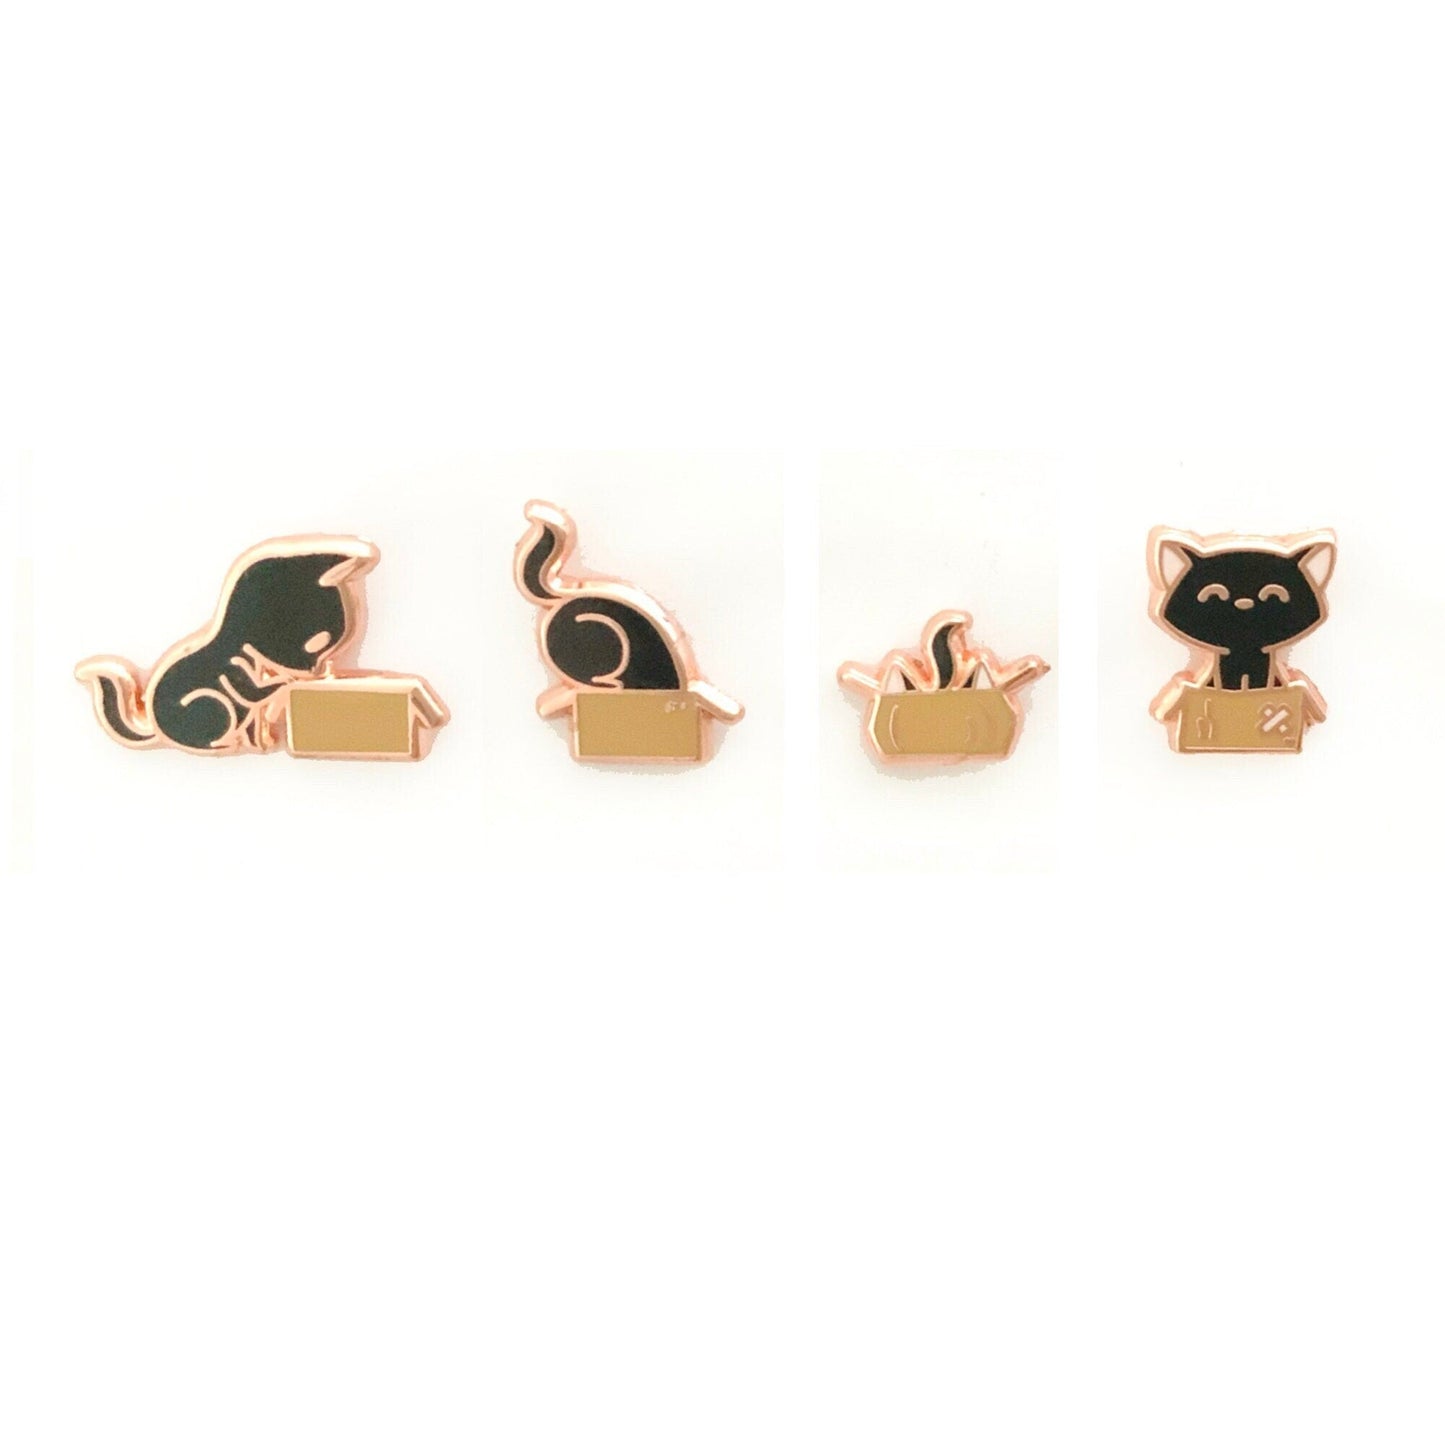 Kitty VS Box - Tiny Enamel Pin Set of 4, Black Cat Pin, Pins, Brooches & Lapel Pins